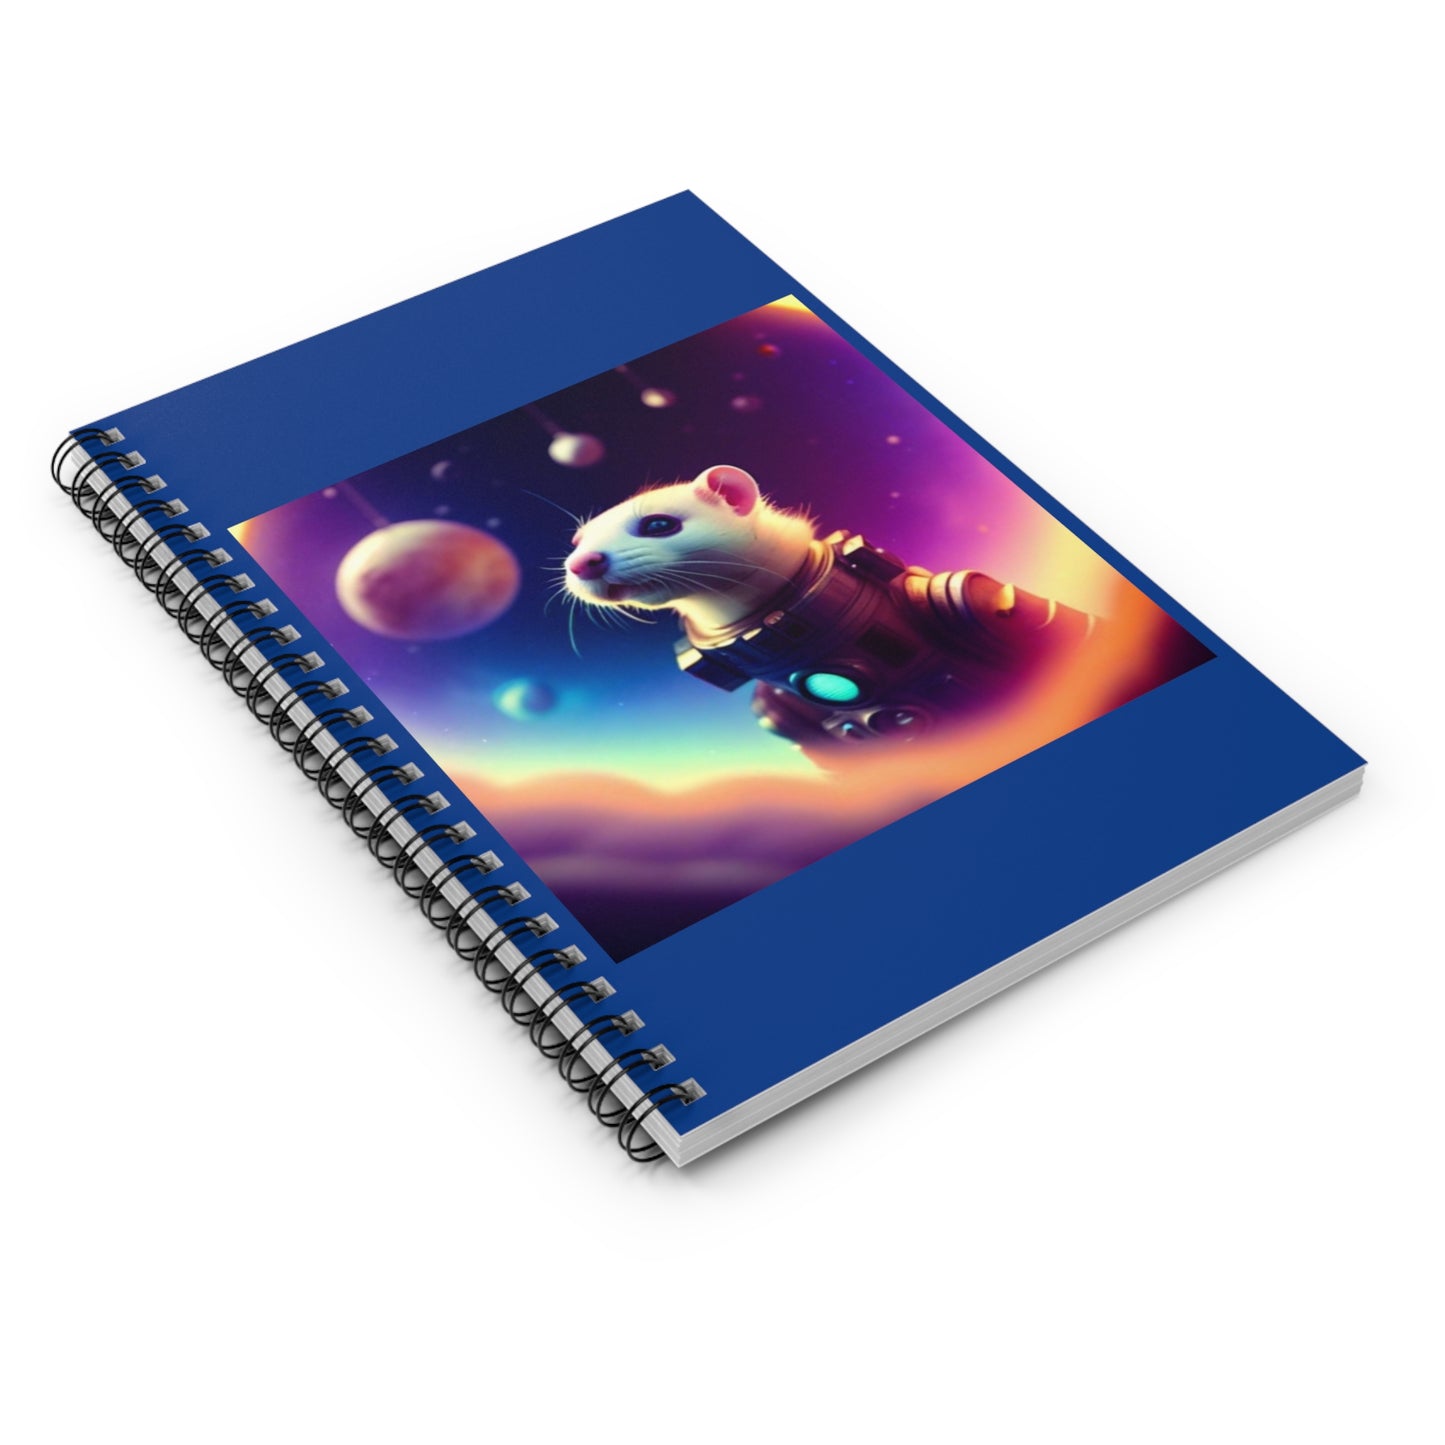 Space Ferret Notebook by Alial Galaxy!